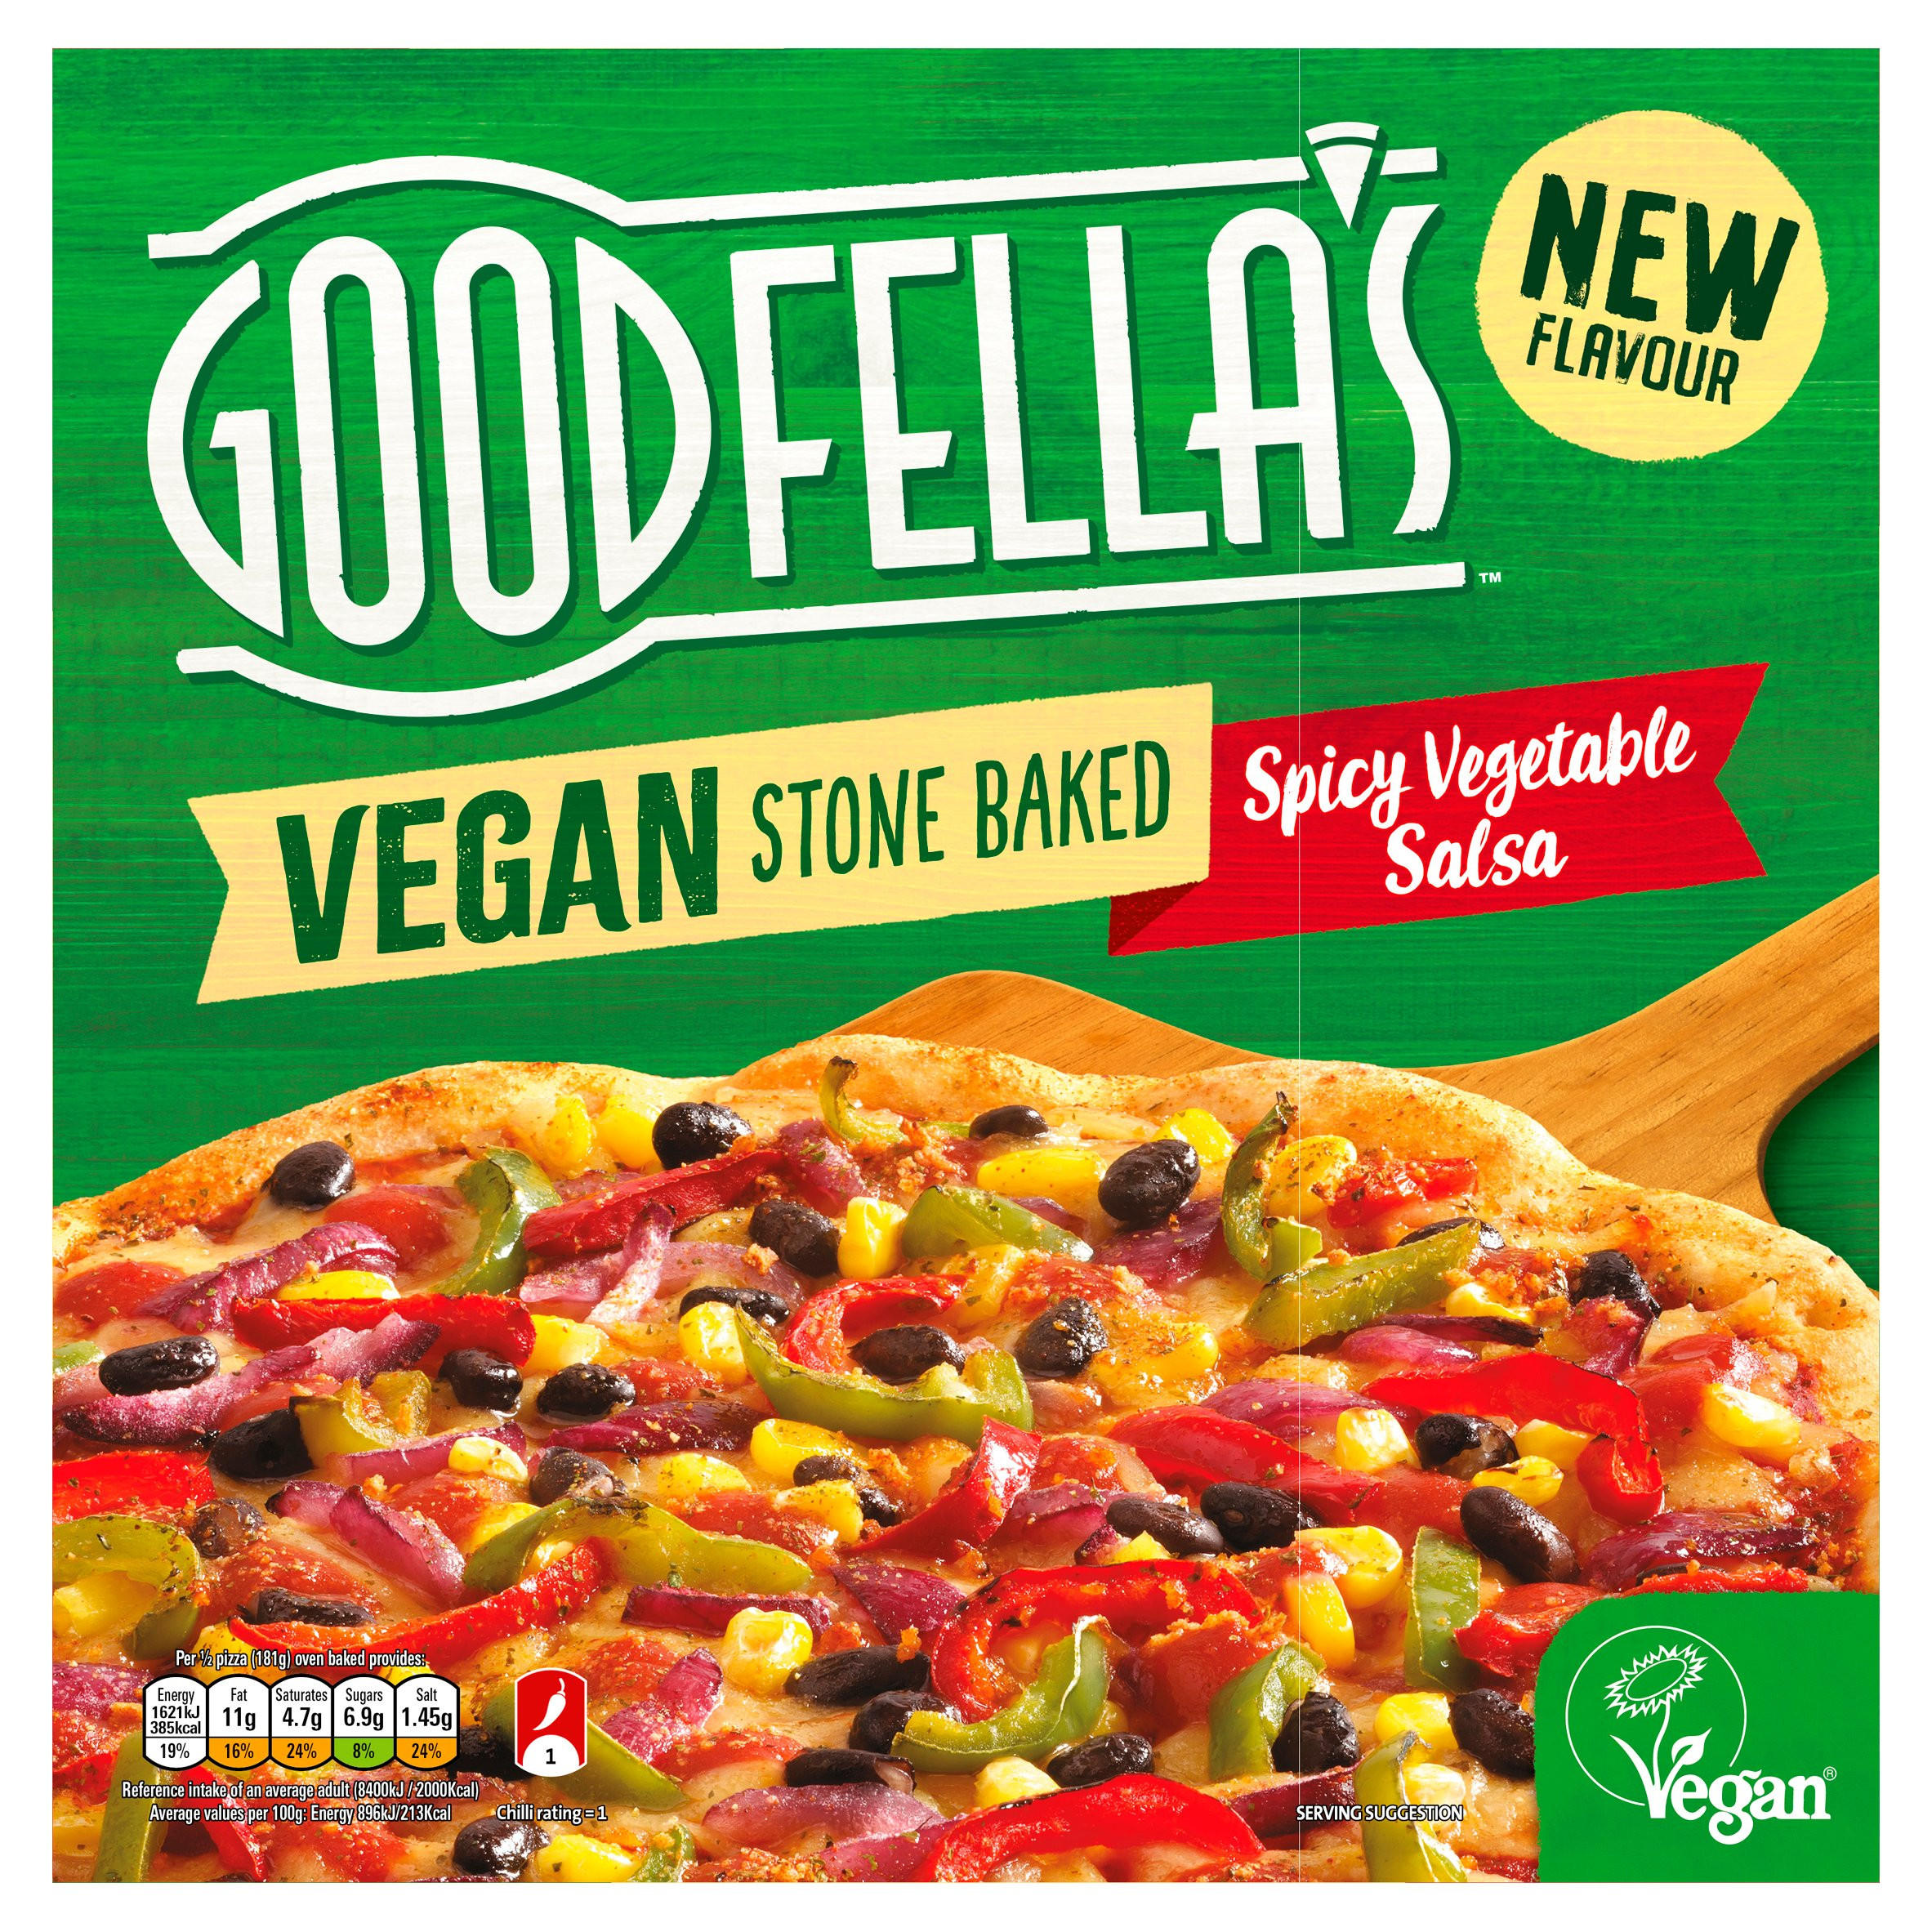 Goodfella's Vegan Stone Baked Spicy Vegetable Salsa 375g